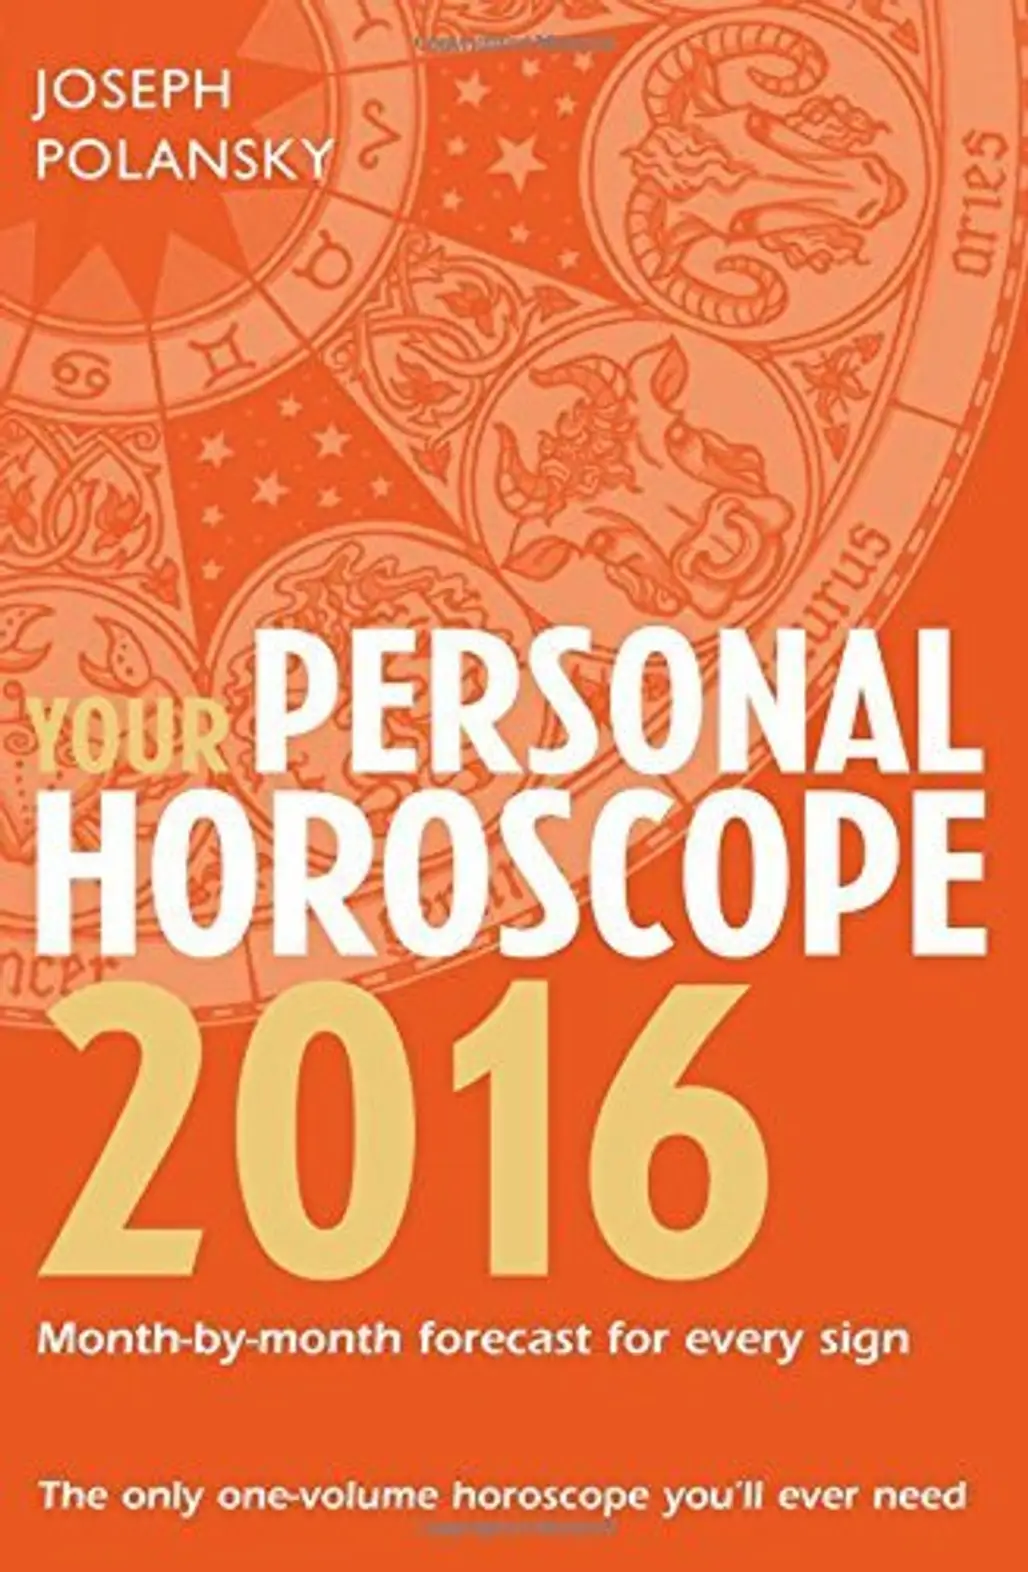 Your Personal Horoscope 2016 by Joseph Polansky